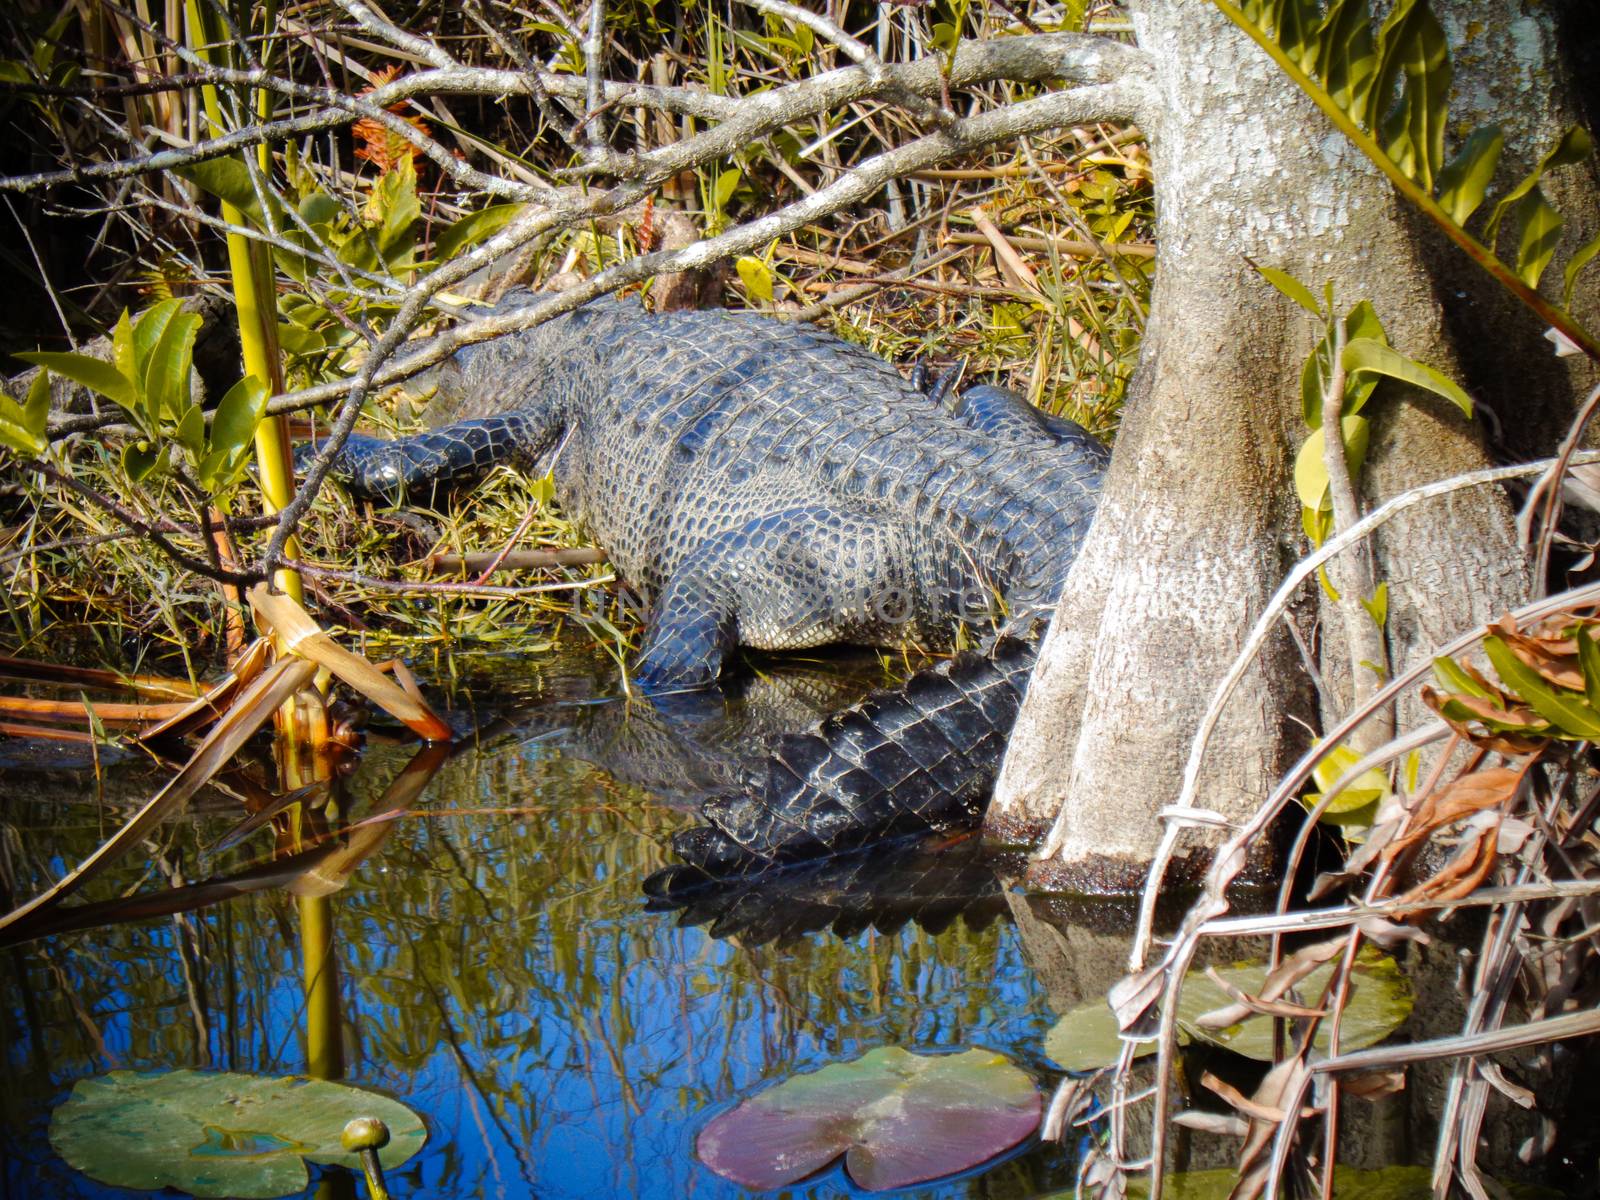 a crocodile in florida by Tevion25